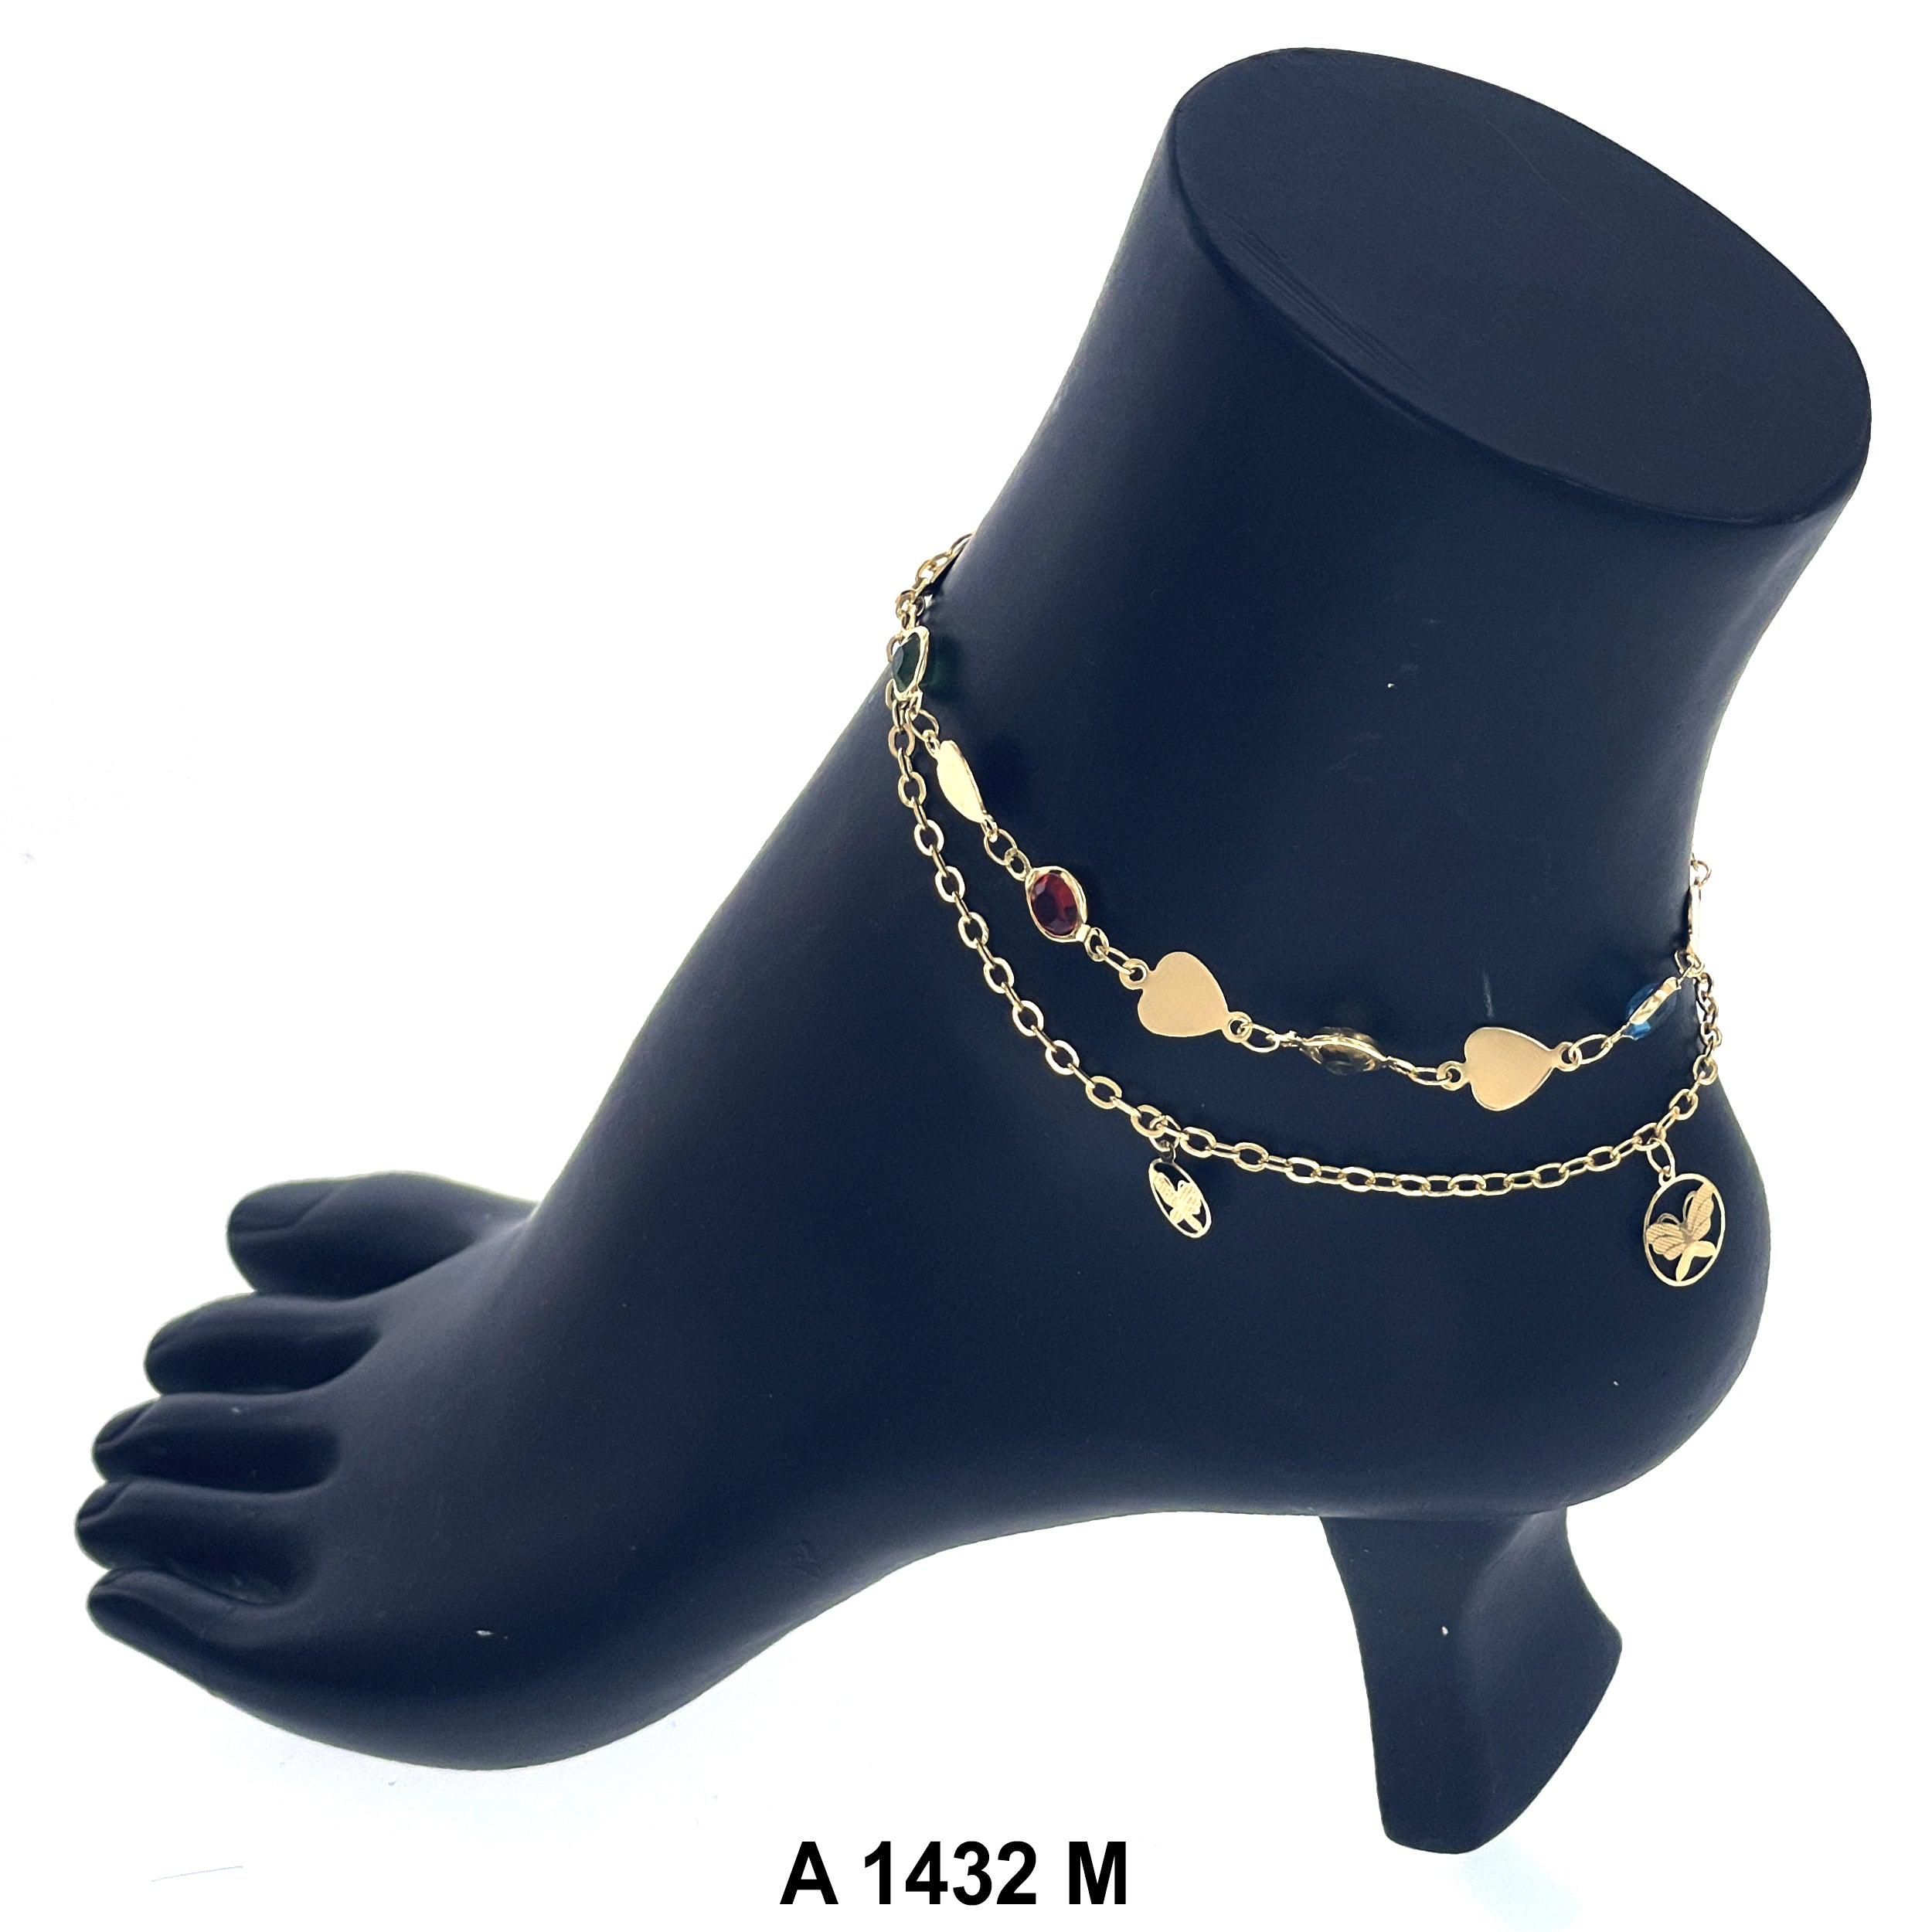 Fashion Anklets A 1432 M